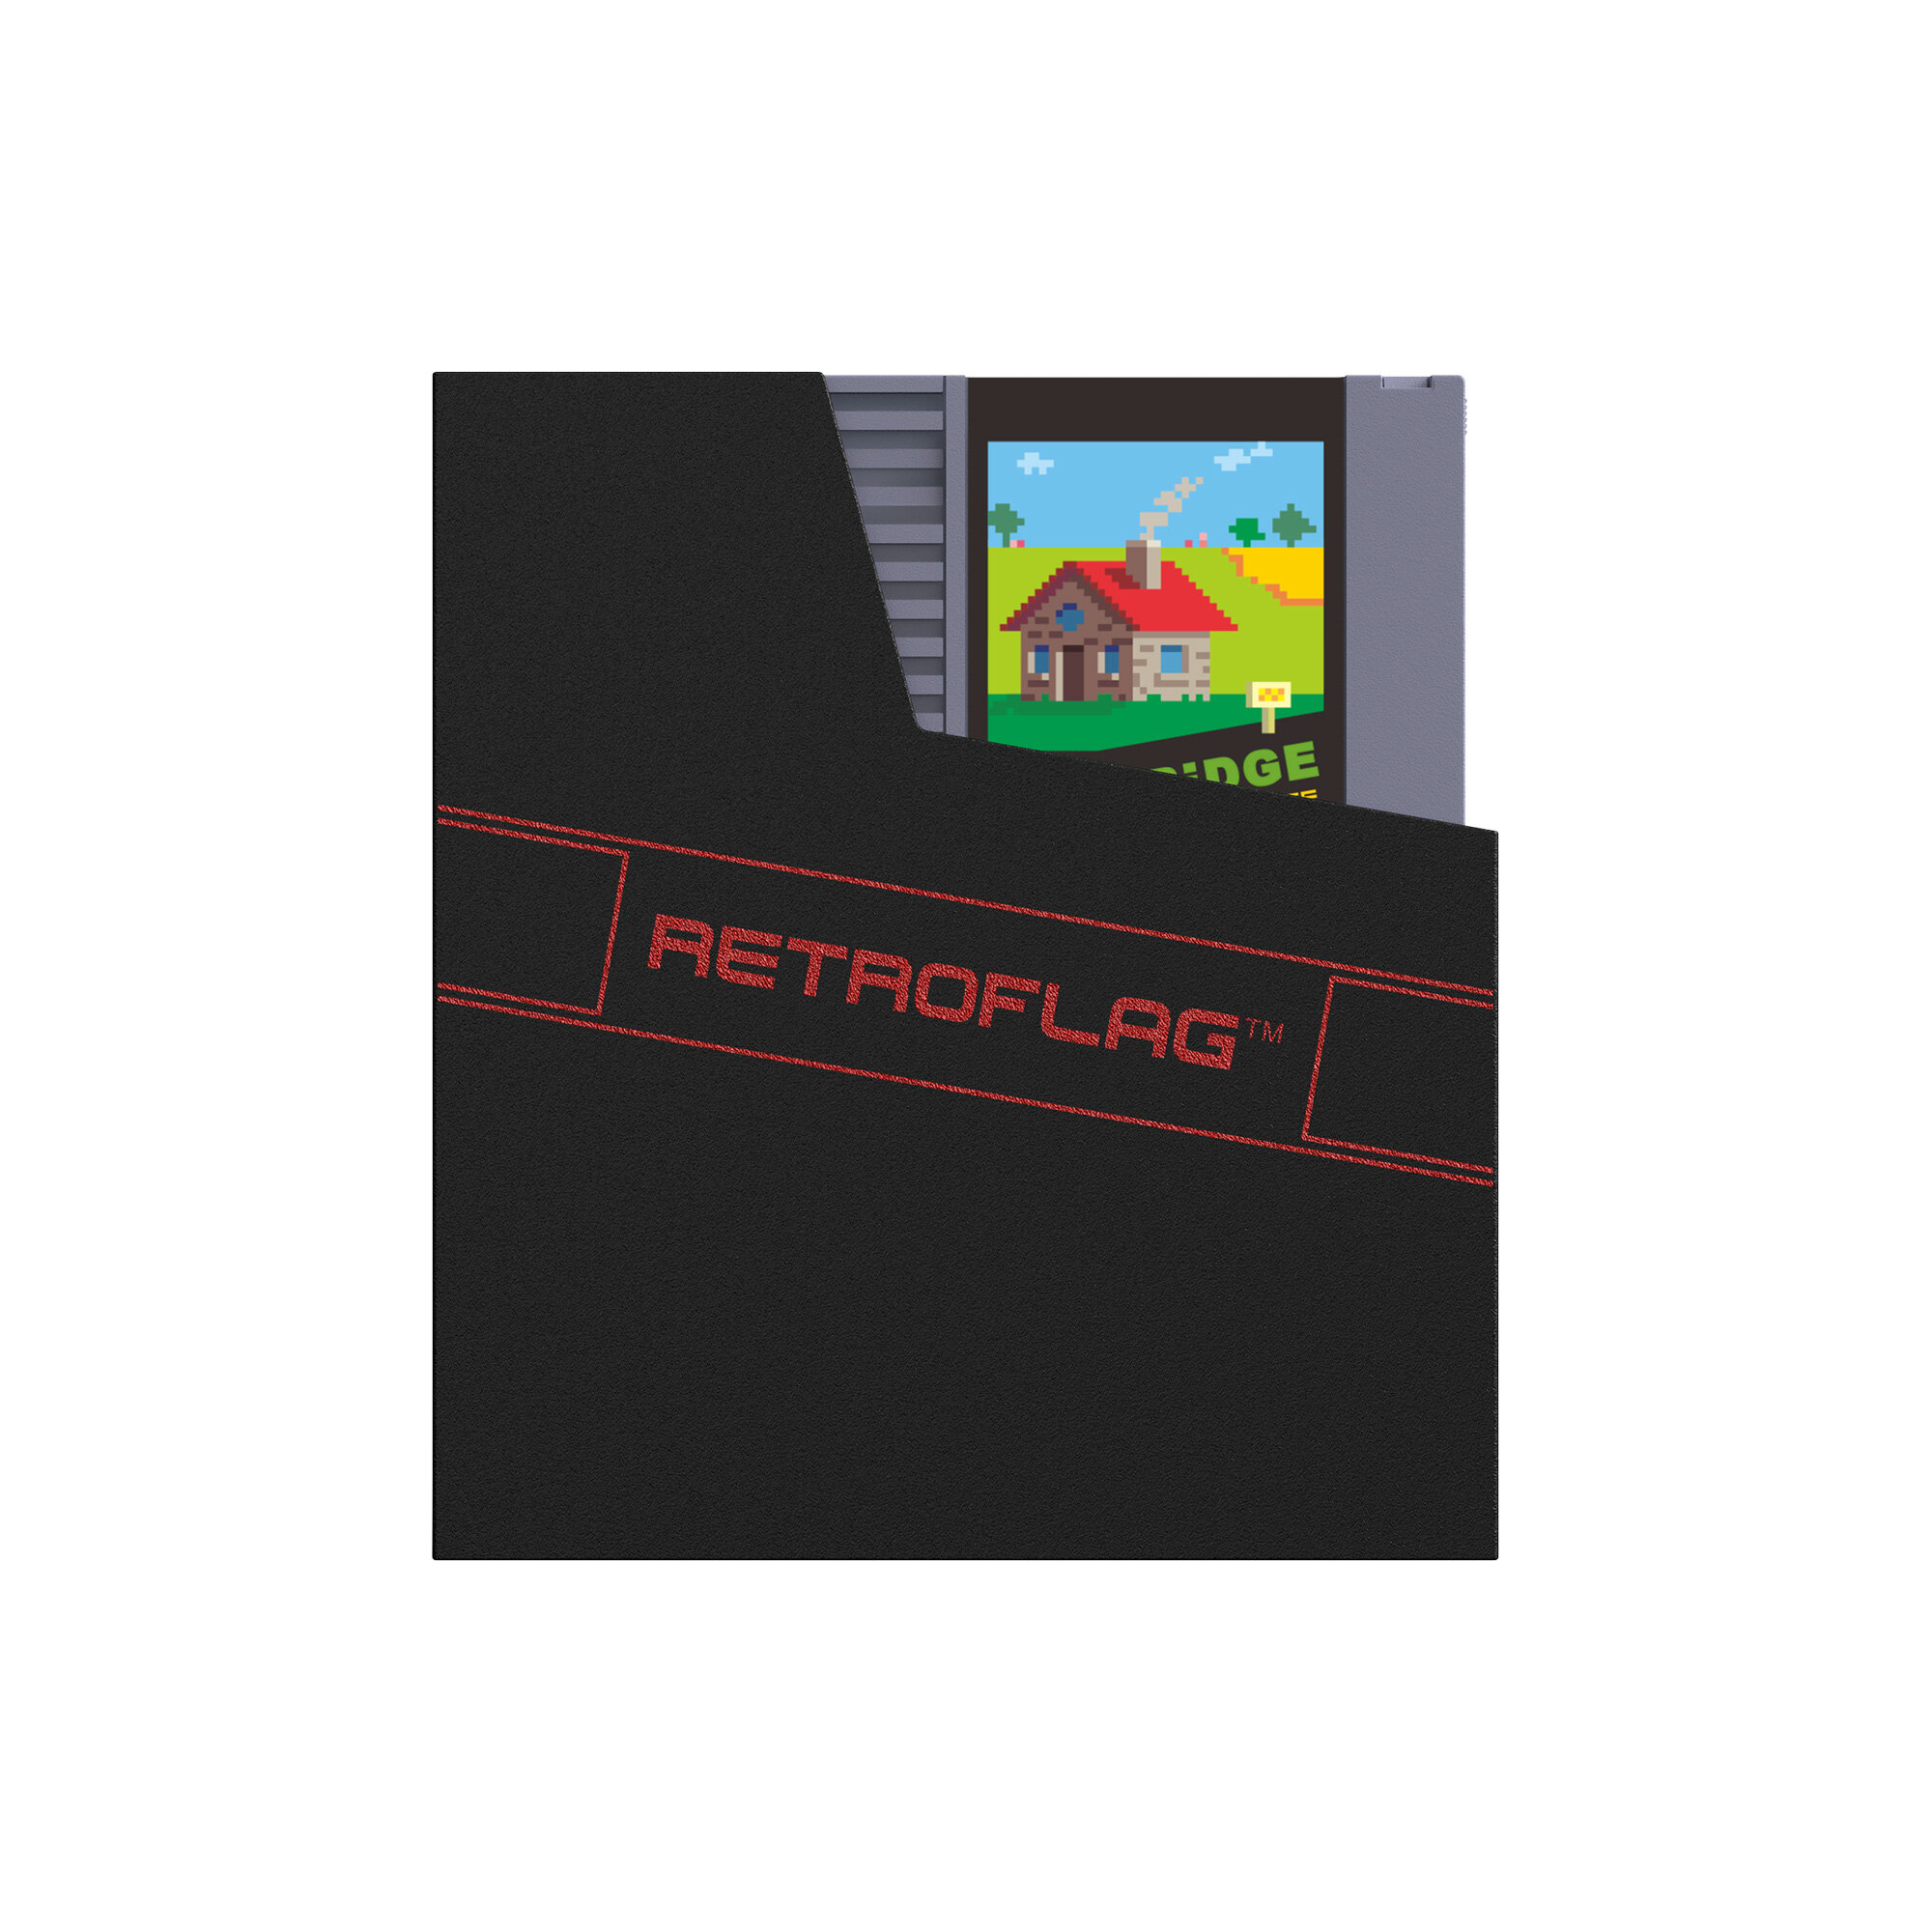 Retroflag NES Cartridge Style Hard Drive Enclosure for NESPi 4 Case Raspberry Pi PC Laptop Android T